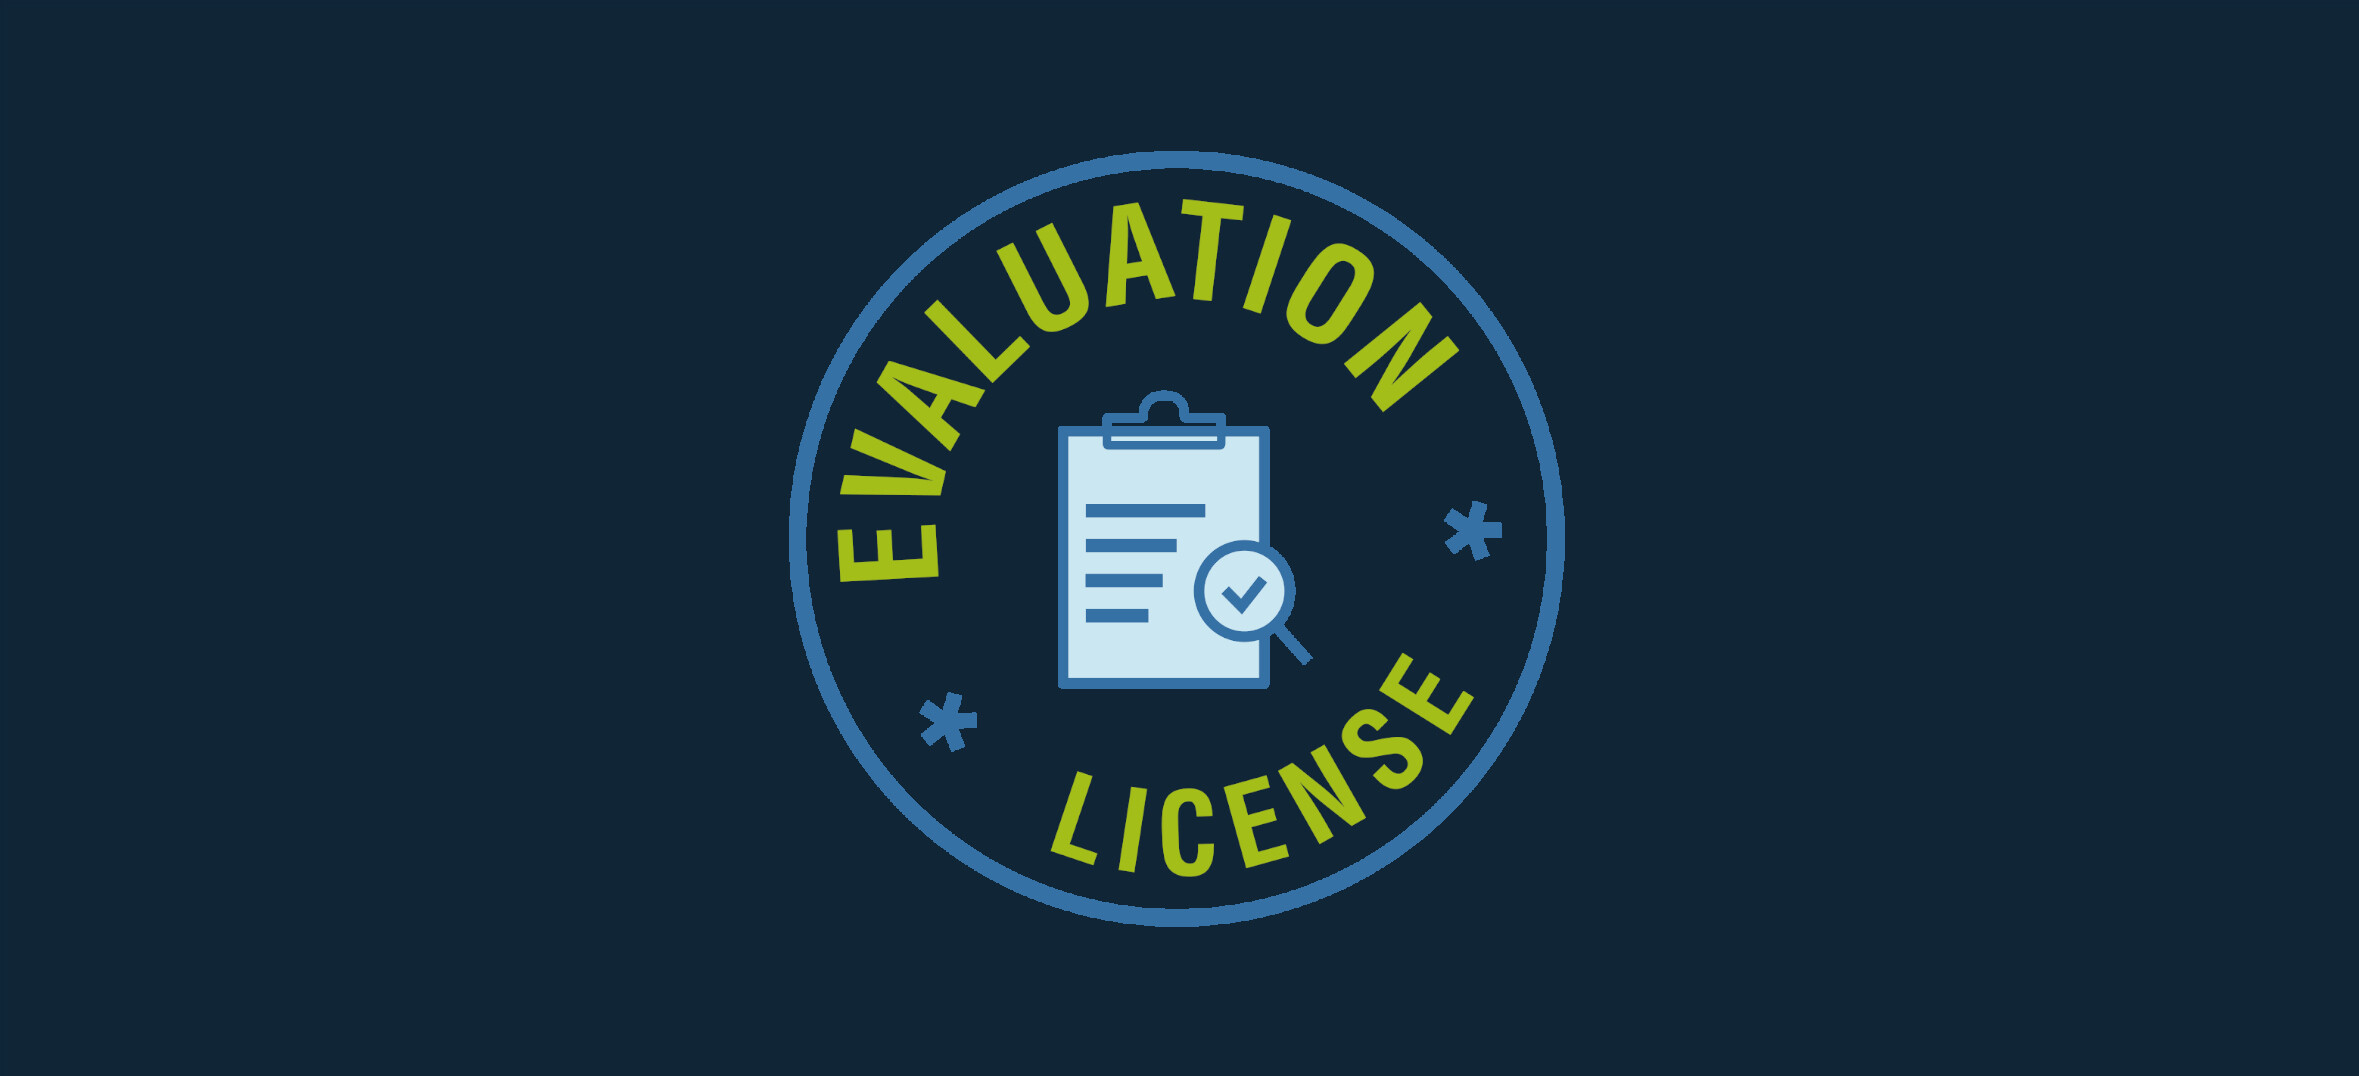 NeuroCheck Software Evaluation License (Image © NeuroCheck)